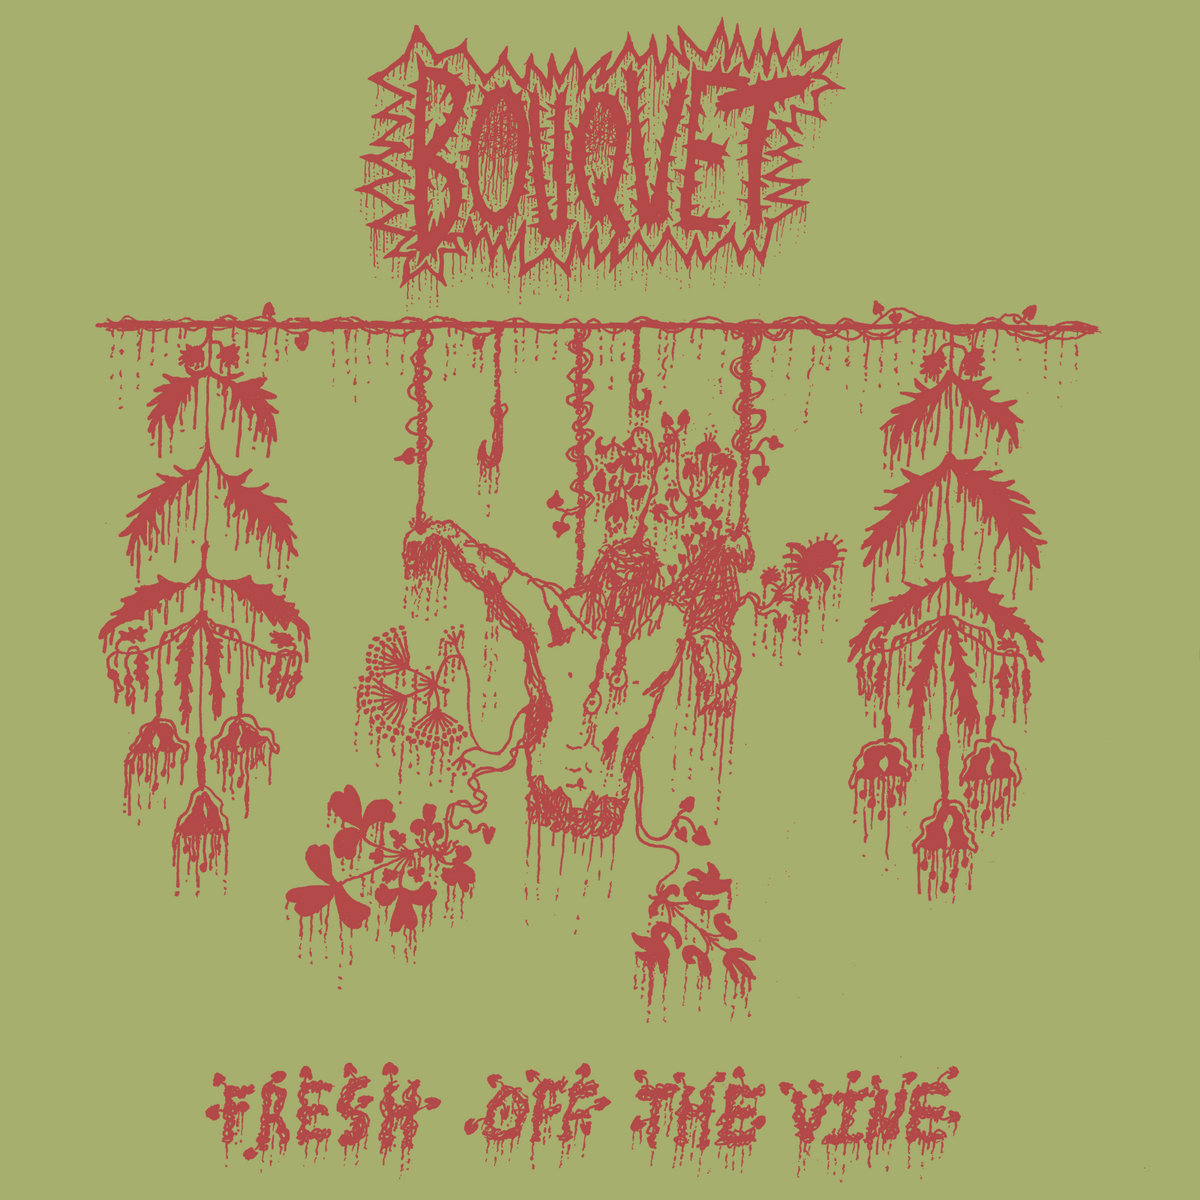 Bouquet - "Fresh Off The Vine" EP - 2023